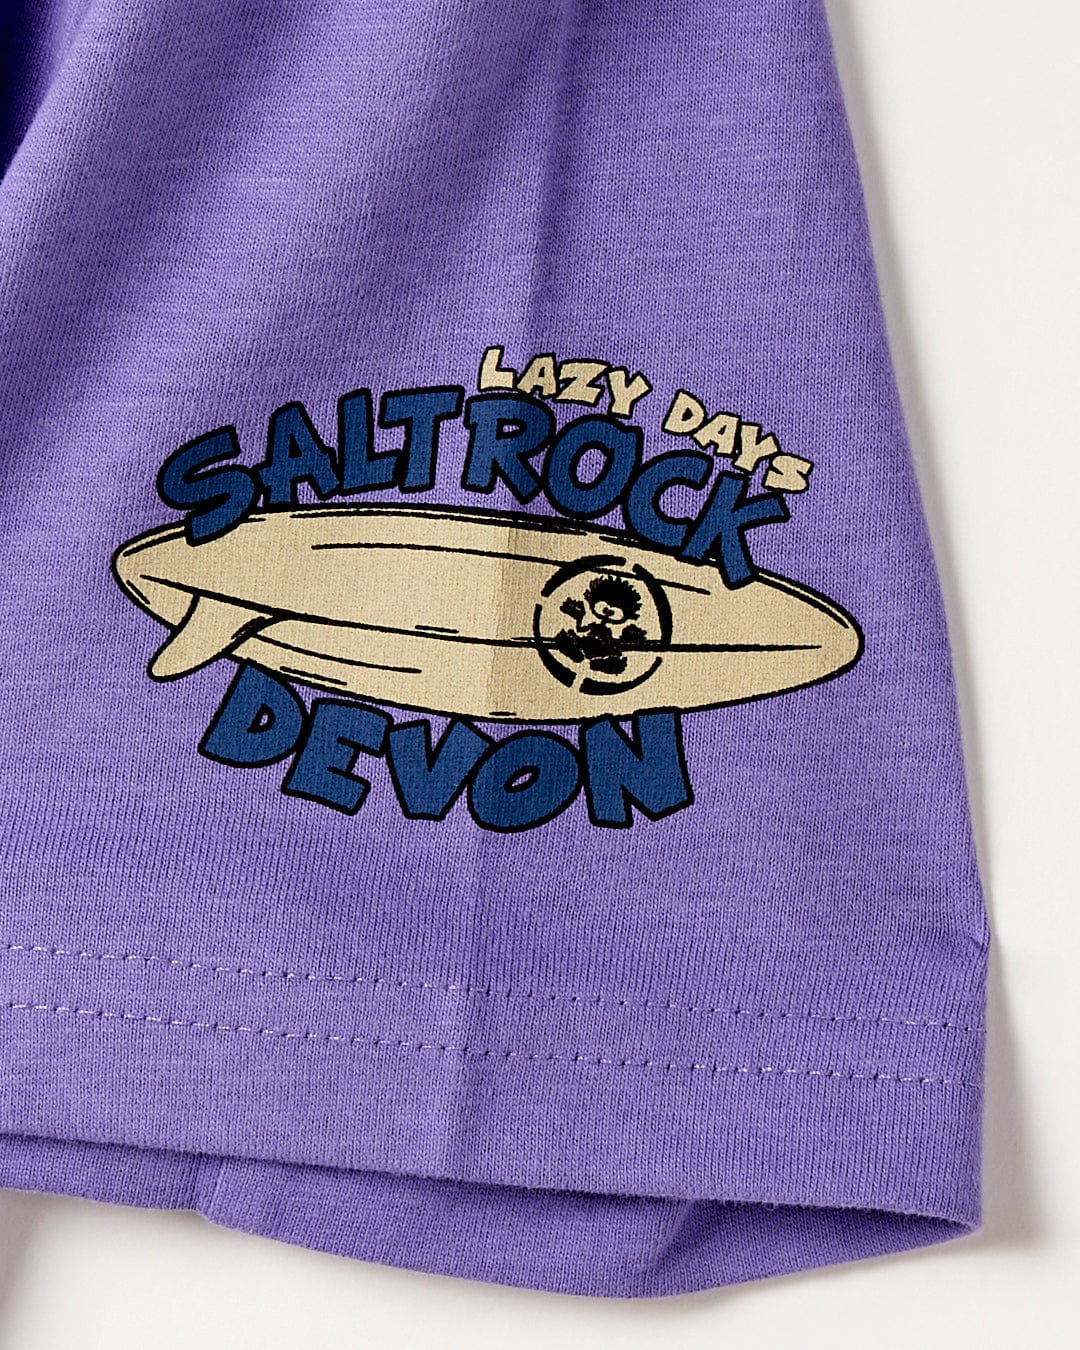 A Lazy Location Devon - Kids T-Shirt - Purple with the words "Saltrock Devon" printed on it.